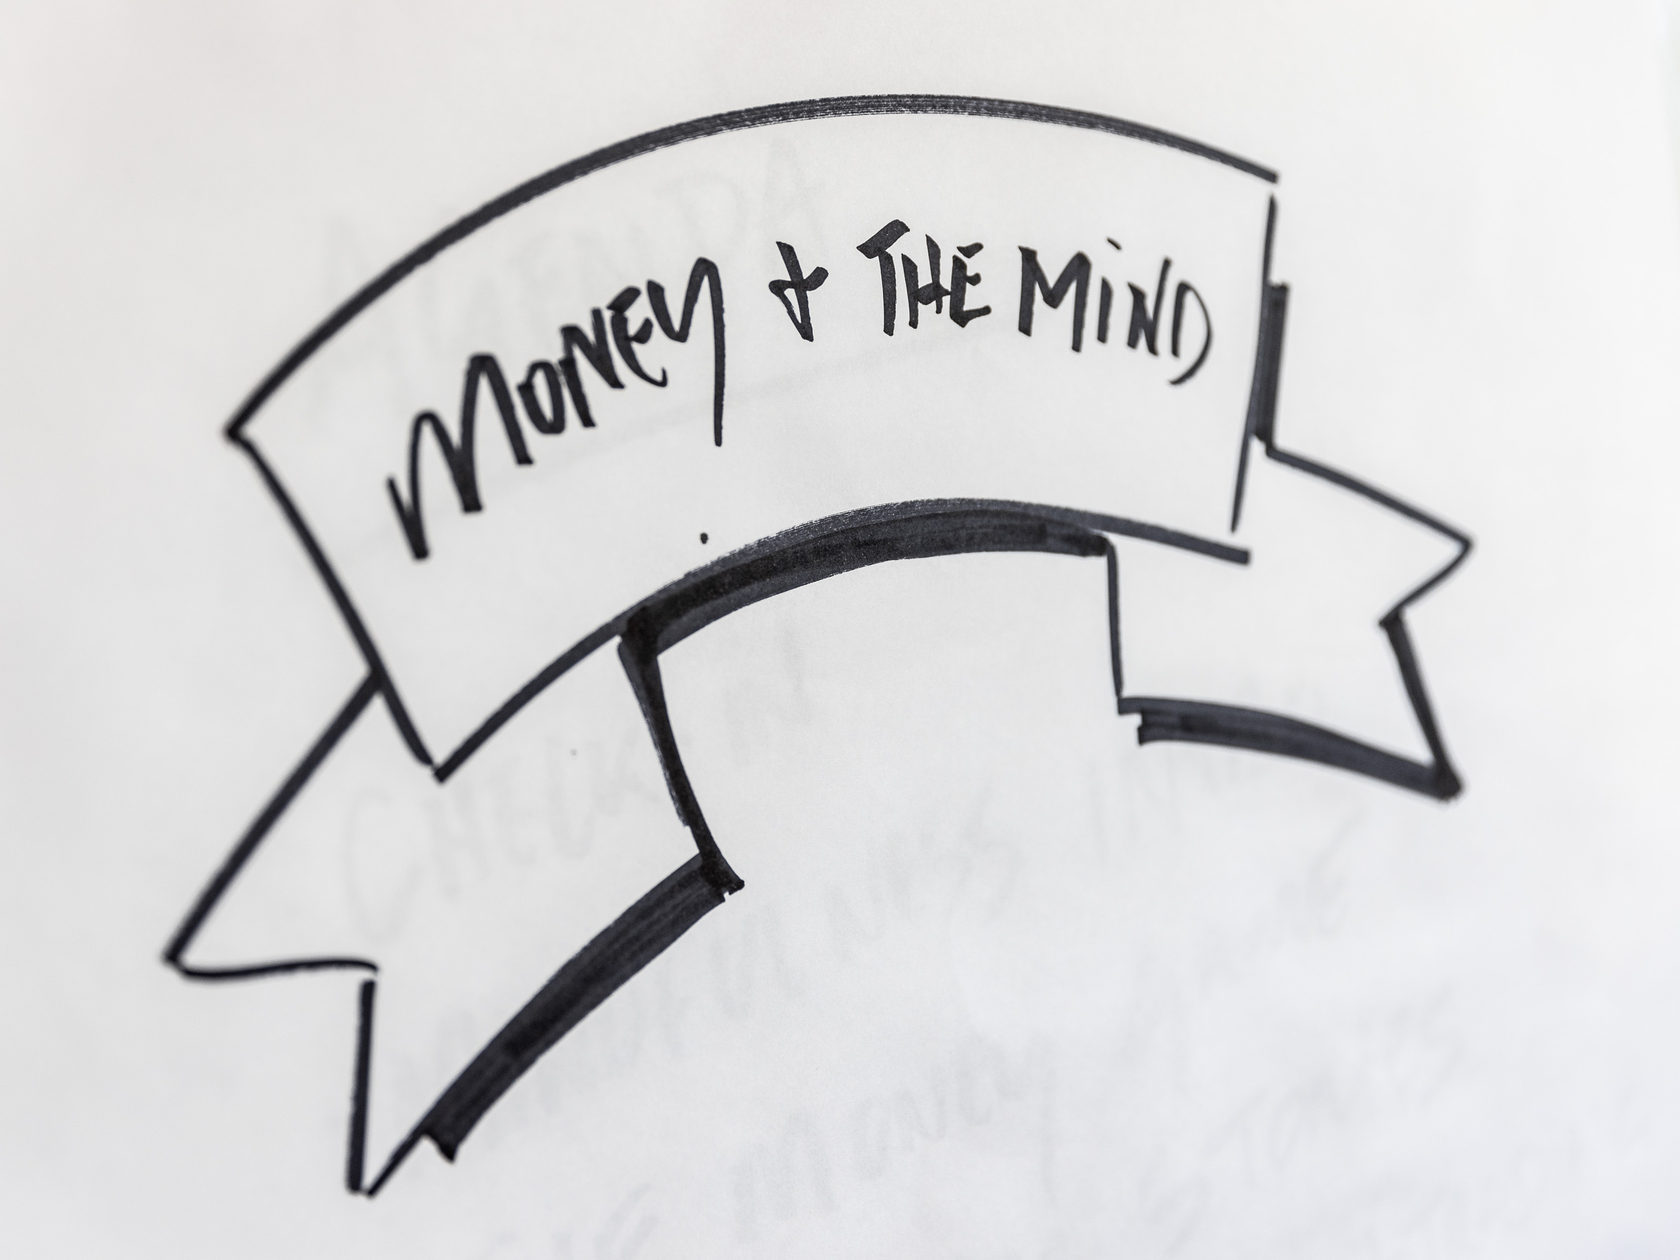 Money + Mind = Psicotrading